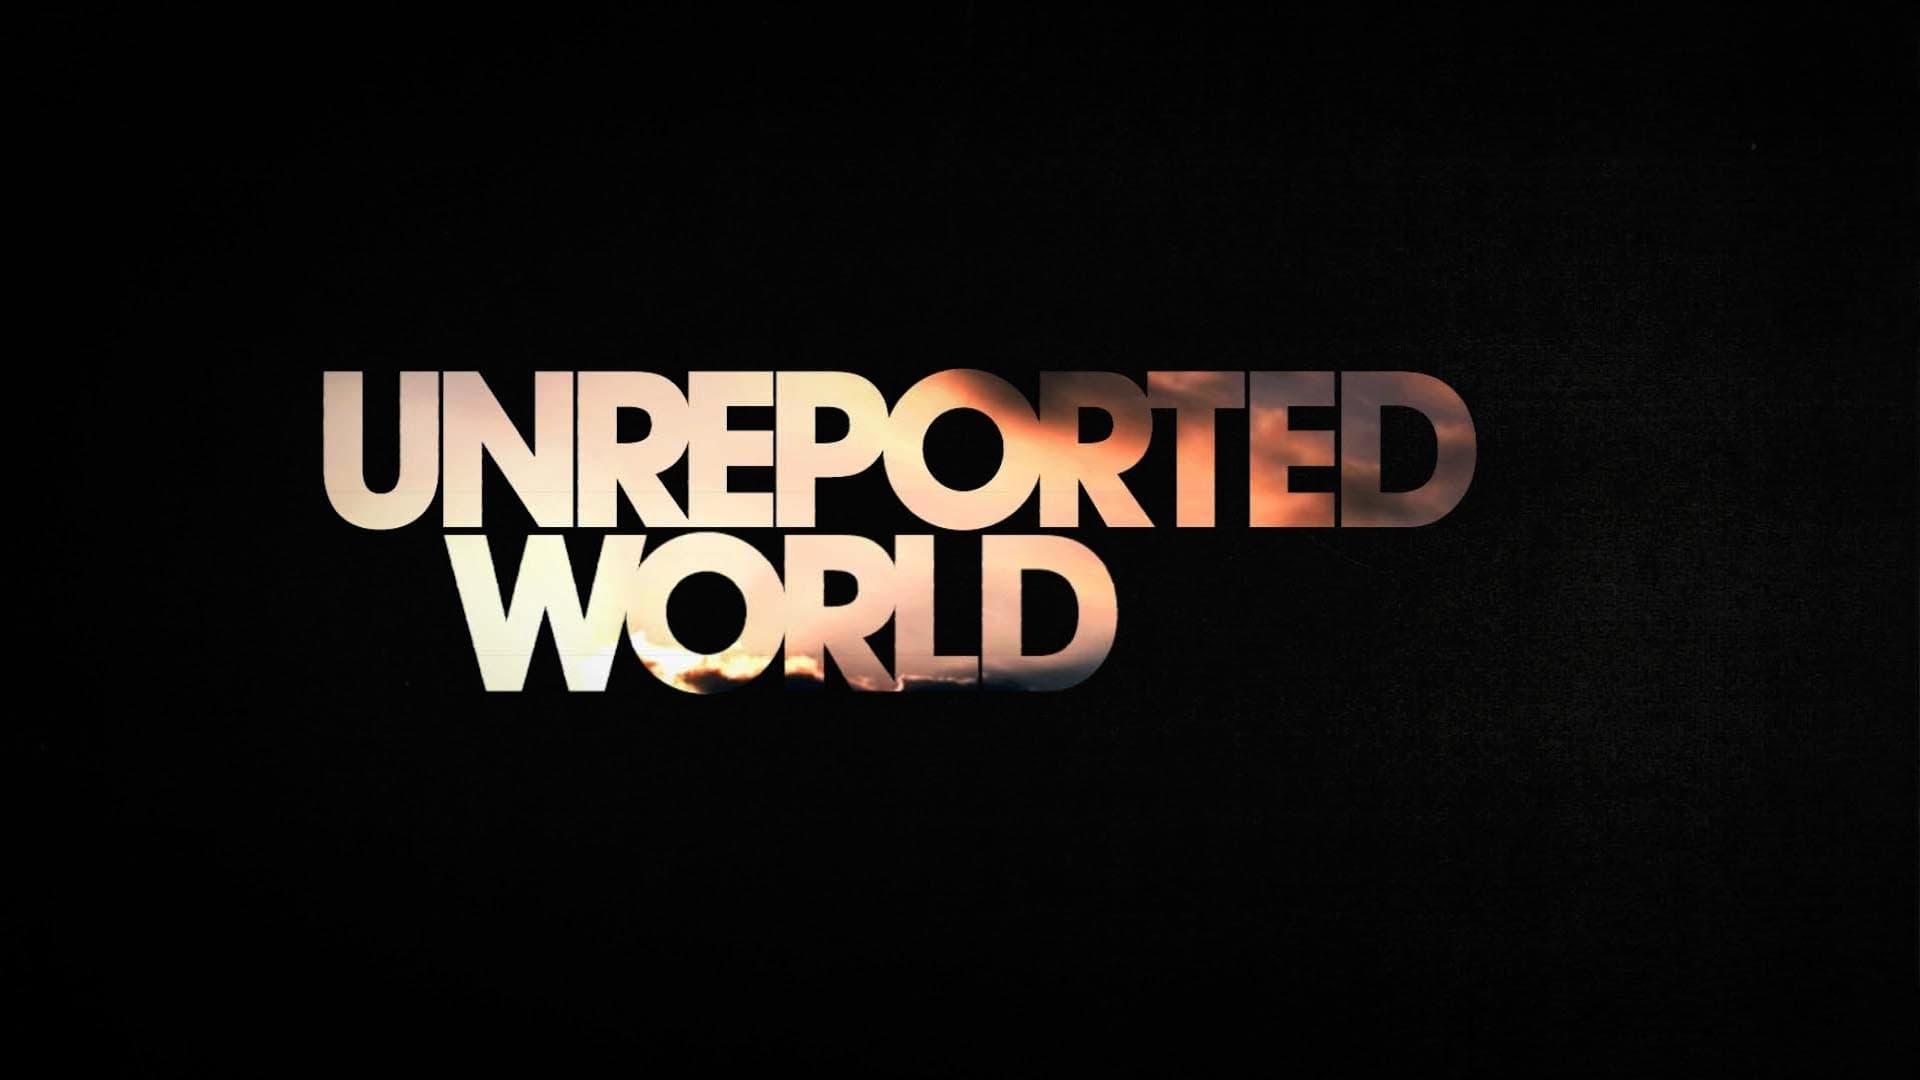 Unreported World backdrop